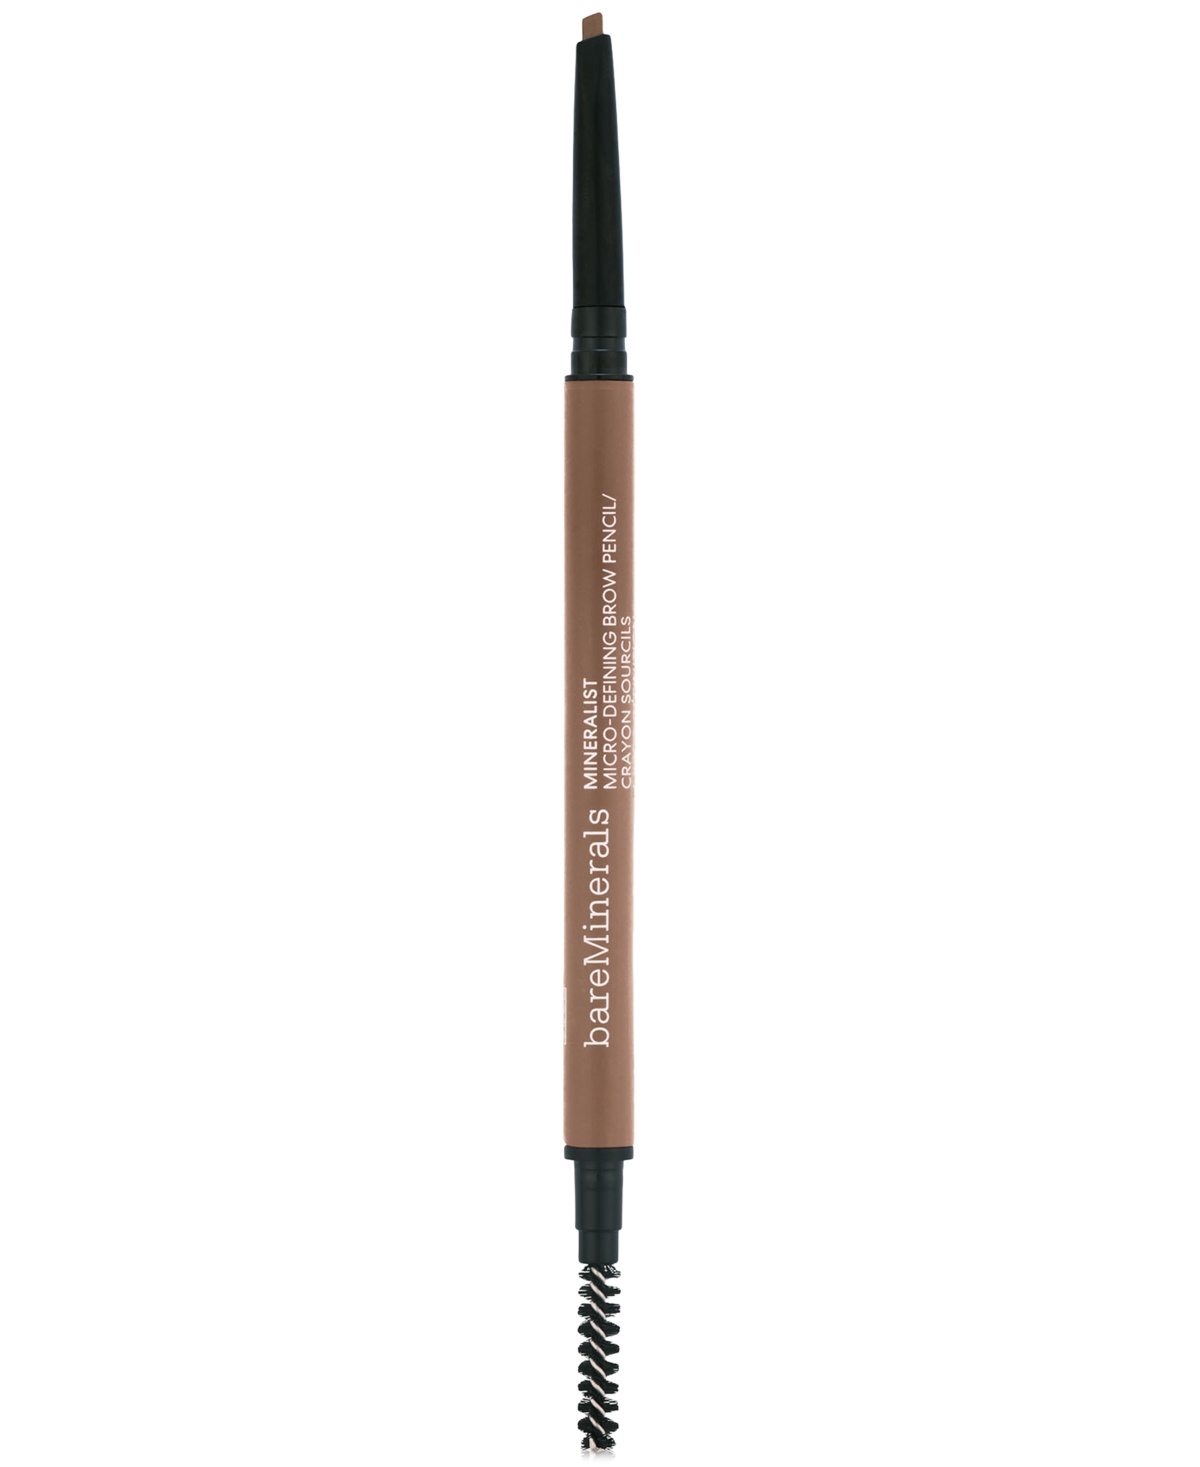 Bareminerals Mineralist Micro-defining Brow Pencil In Light Brunette